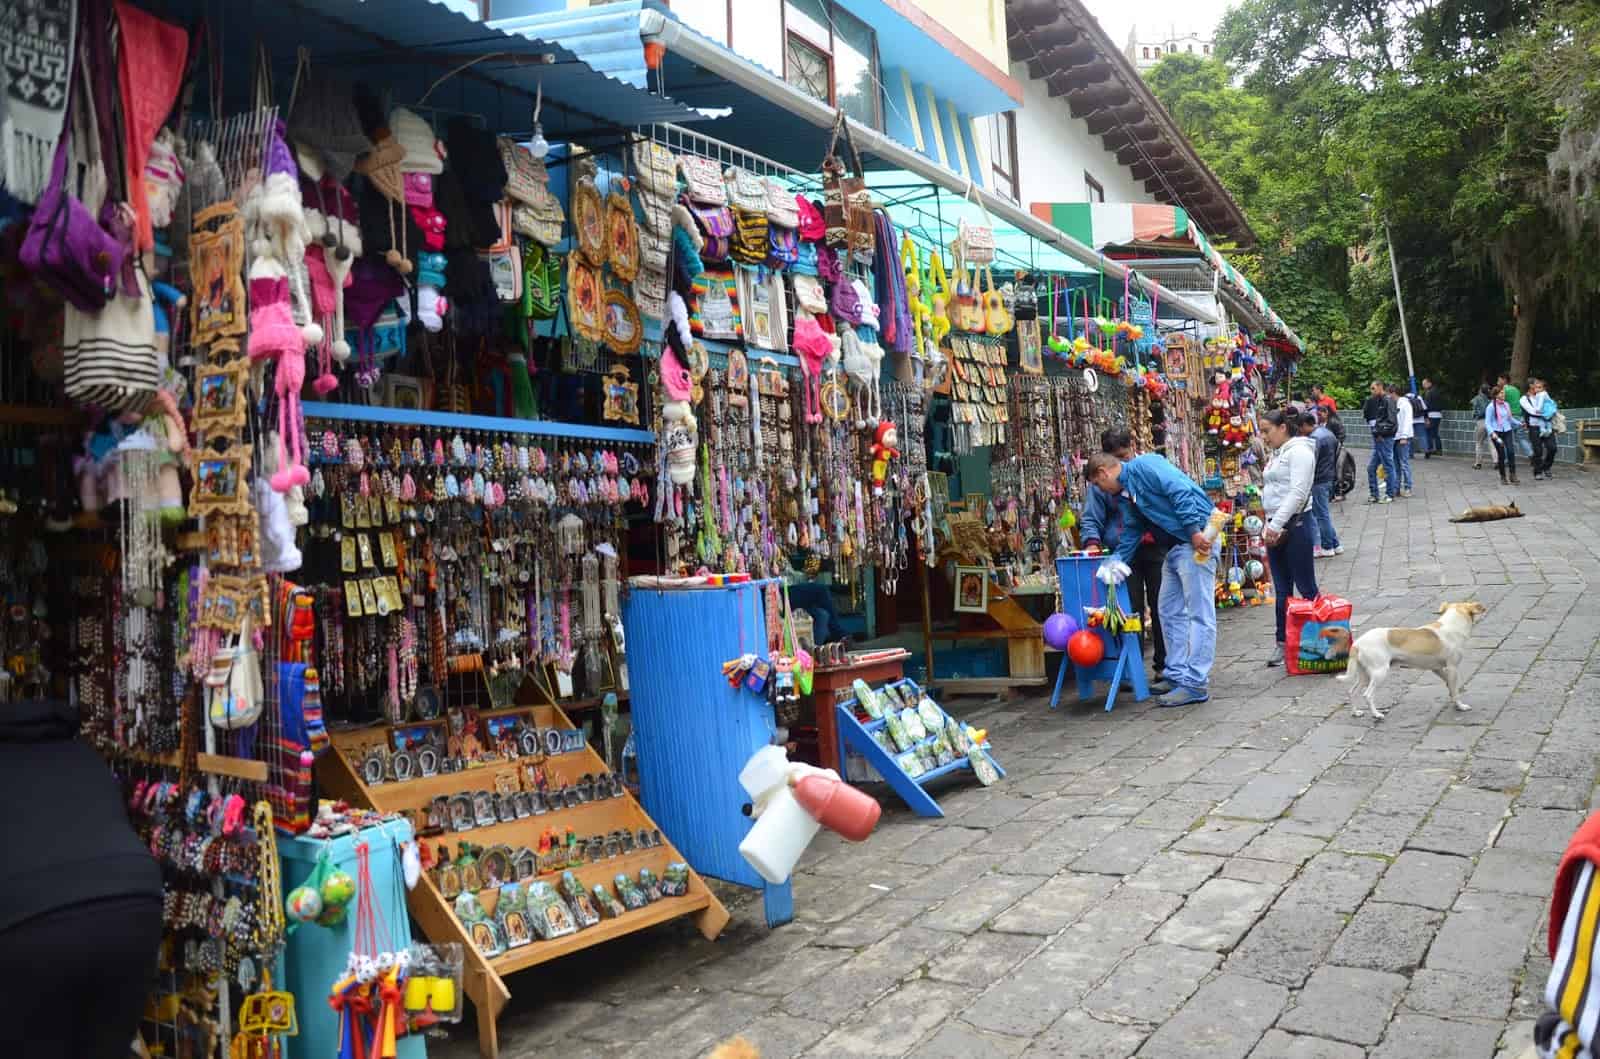 Vendors at Las Lajas Sanctuary near Ipiales, Nariño, Colombia